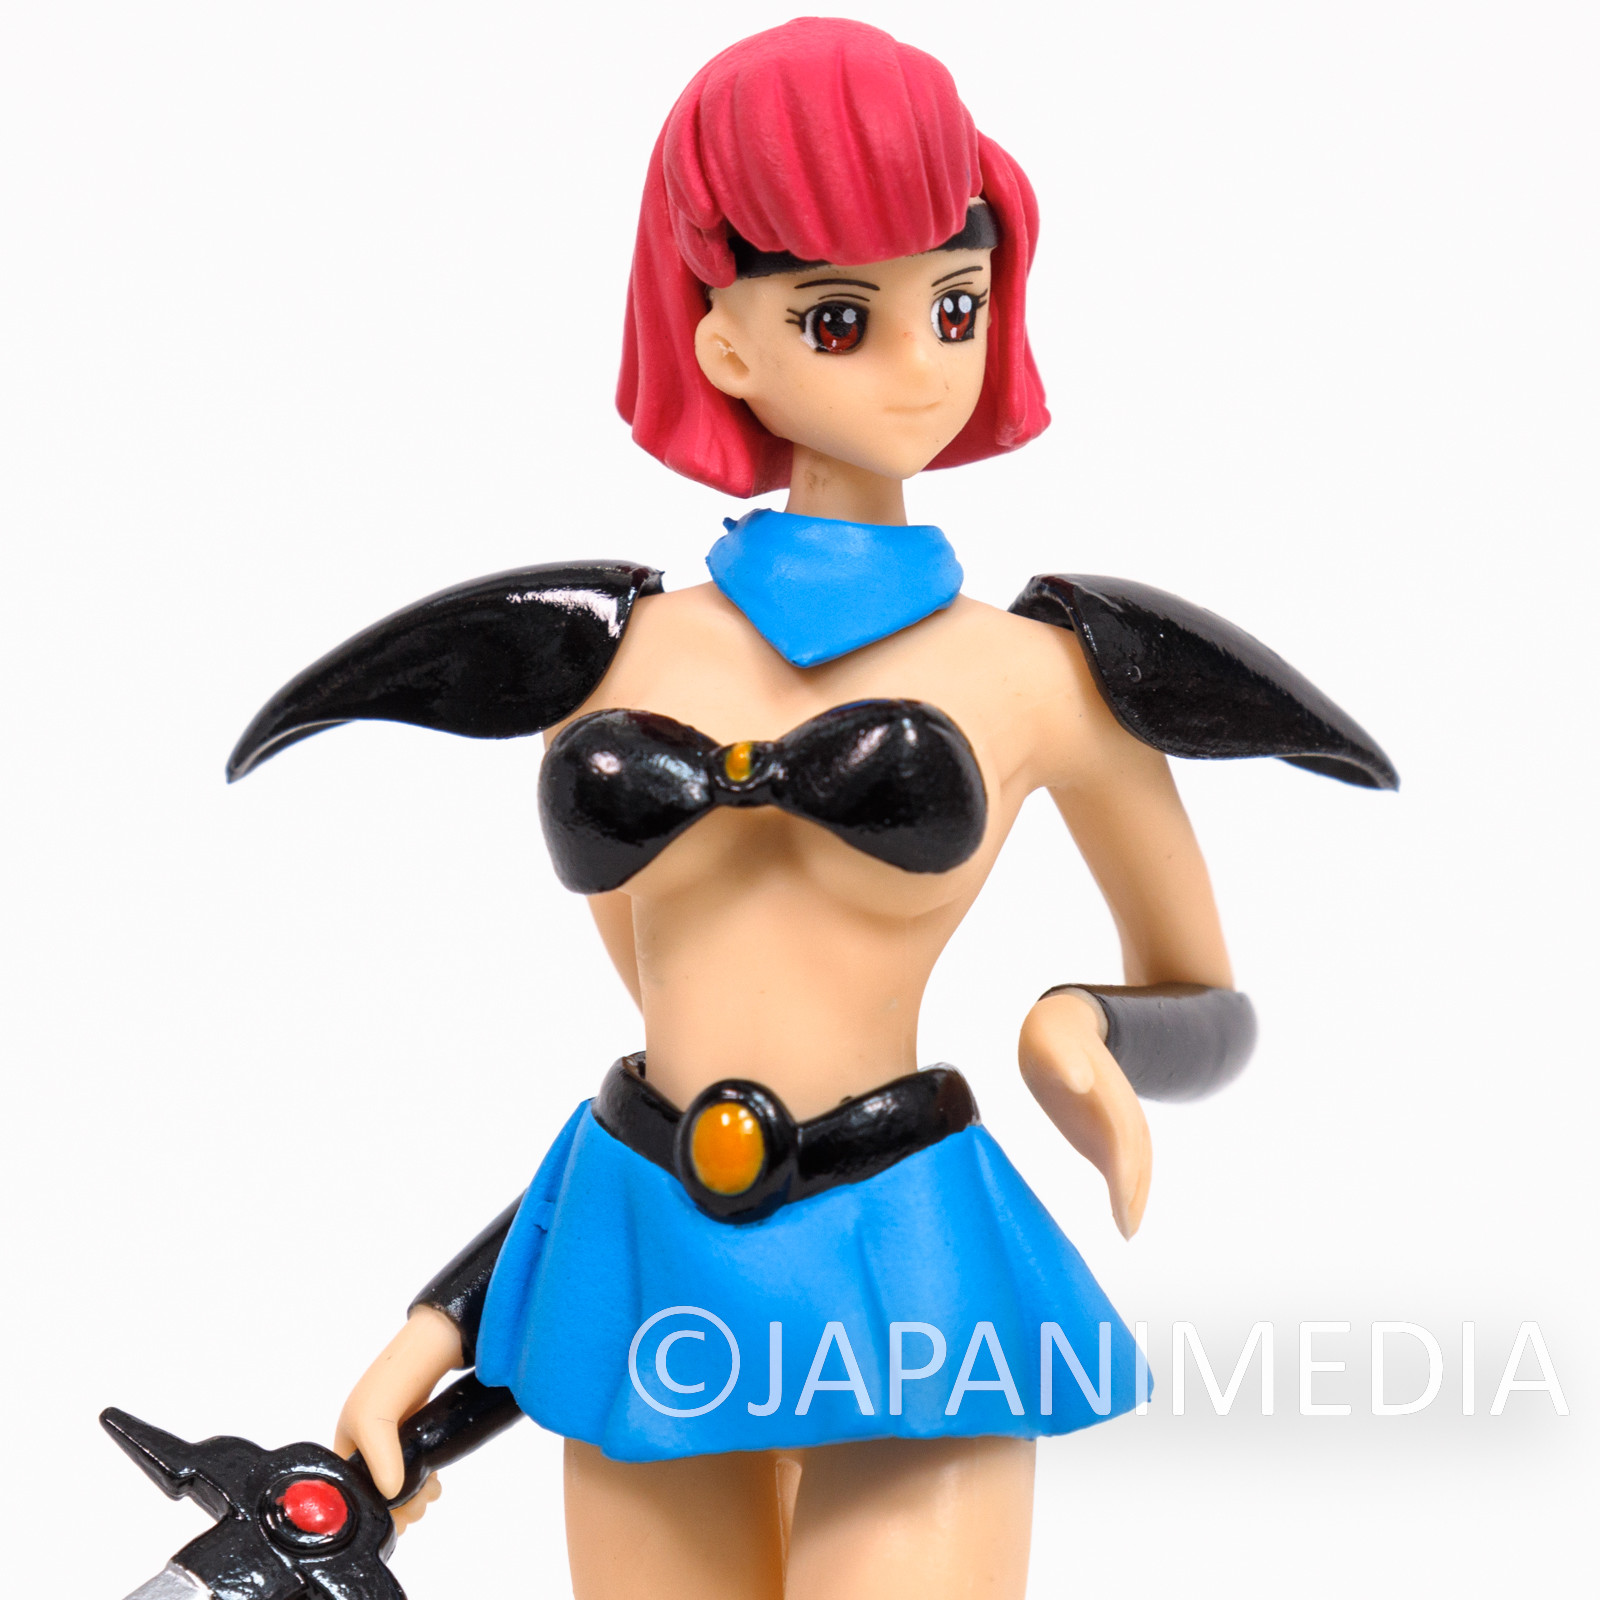 RARE! Fantasm Soldier Valis Reiko Kirishima Figure JAPAN GAME MSX NES